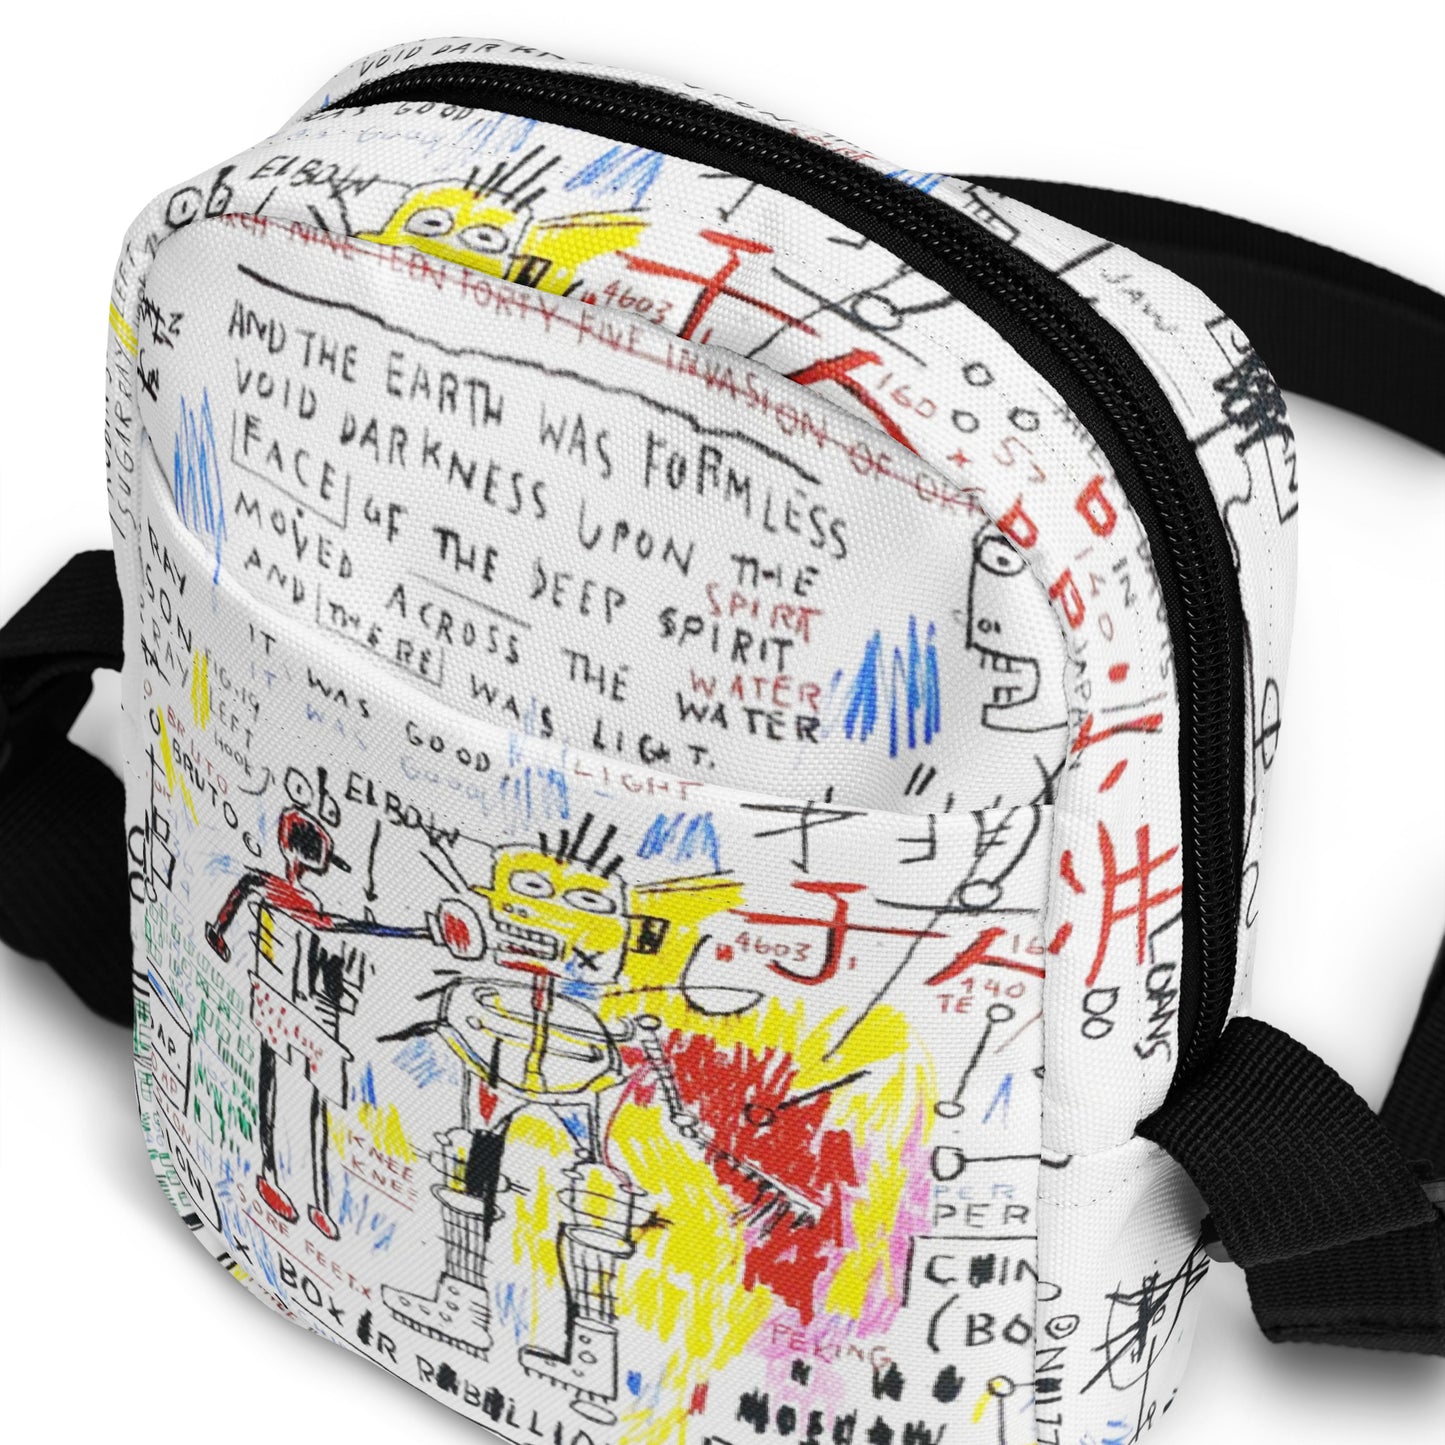 Jean-Michel Basquiat "Boxer Rebellion" Artwork Bag